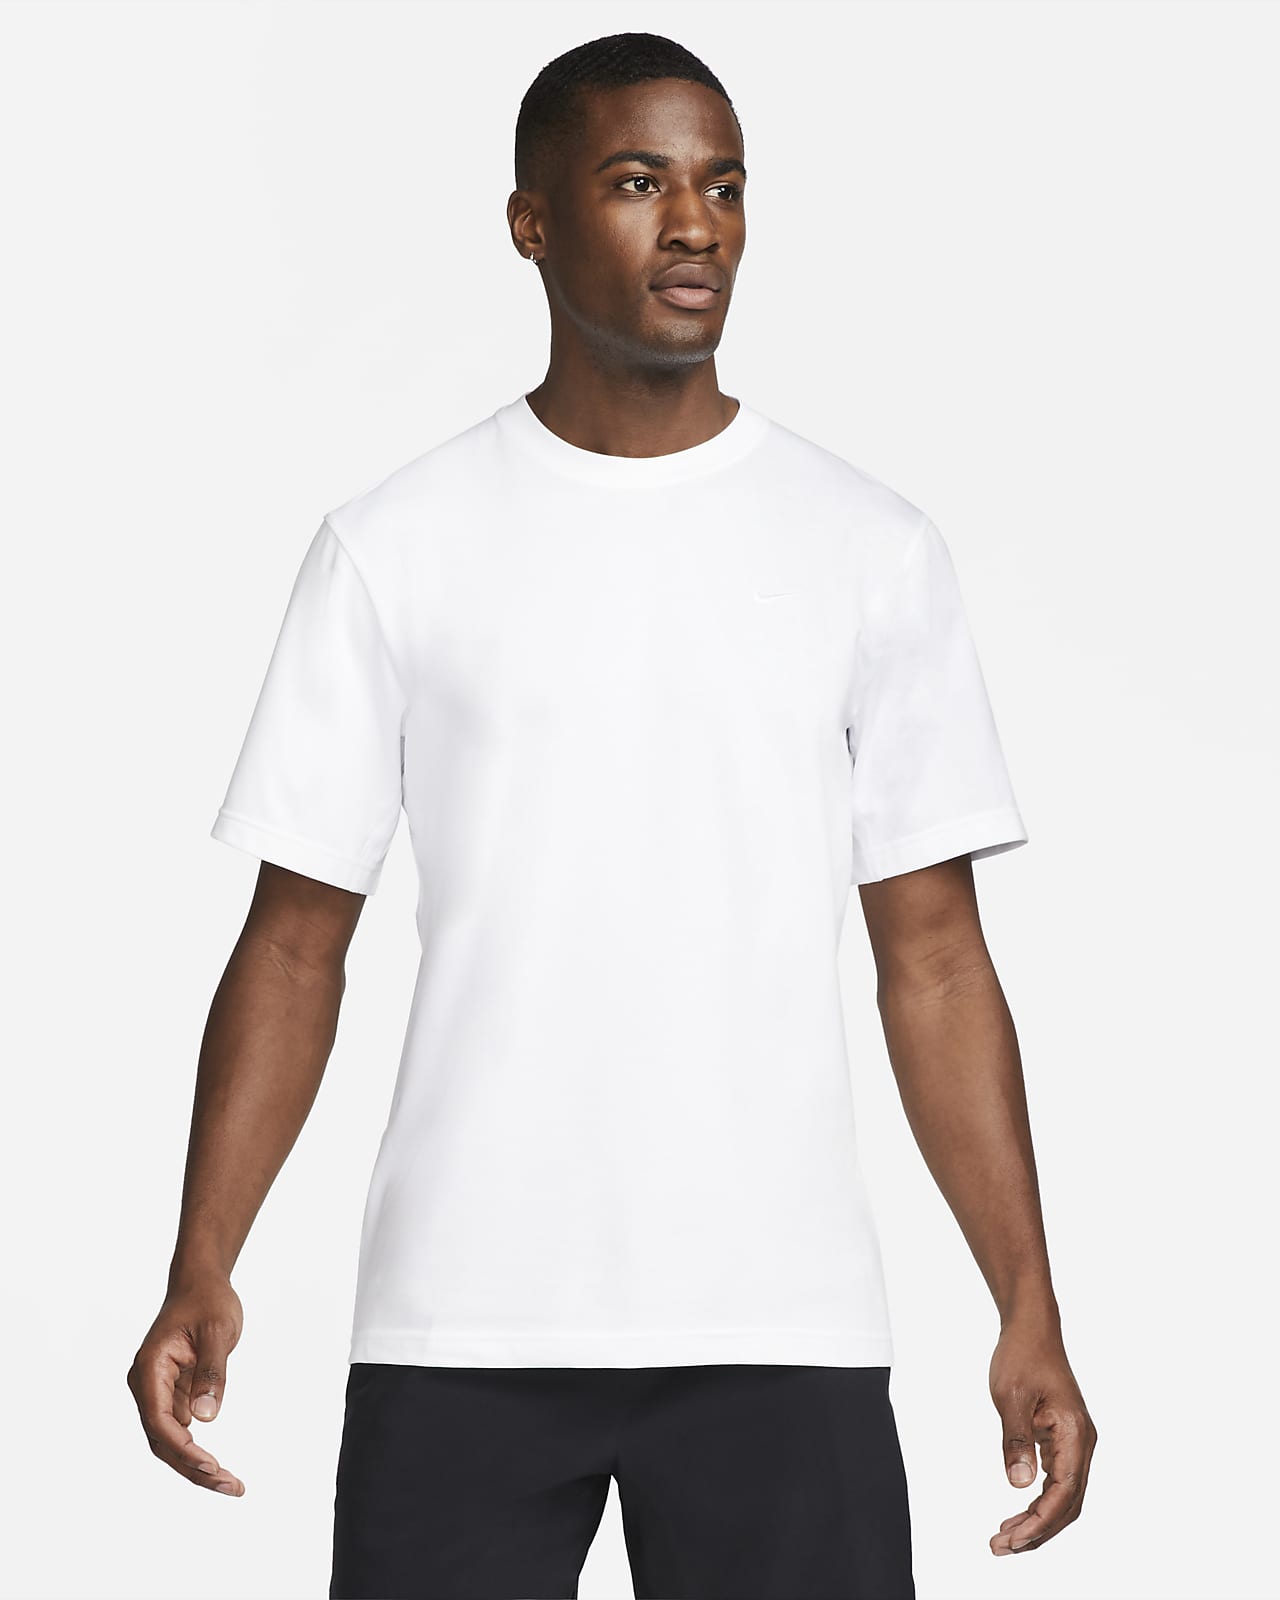 Nike Dri-FIT Primary Men's Versatile Fitness T-Shirt